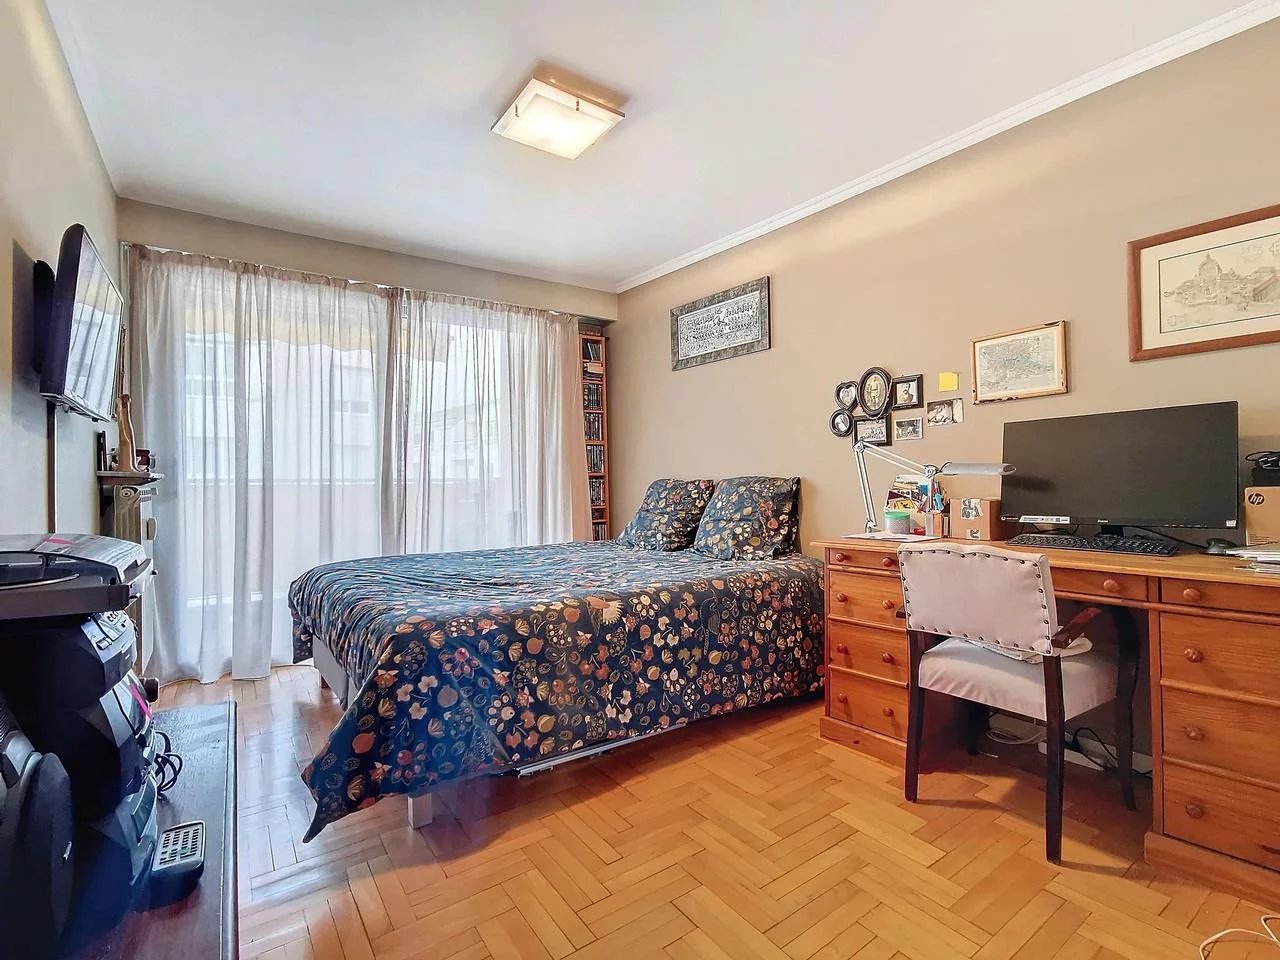 Appartement  4 Locali 76.86m2  In vendita   300 000 €